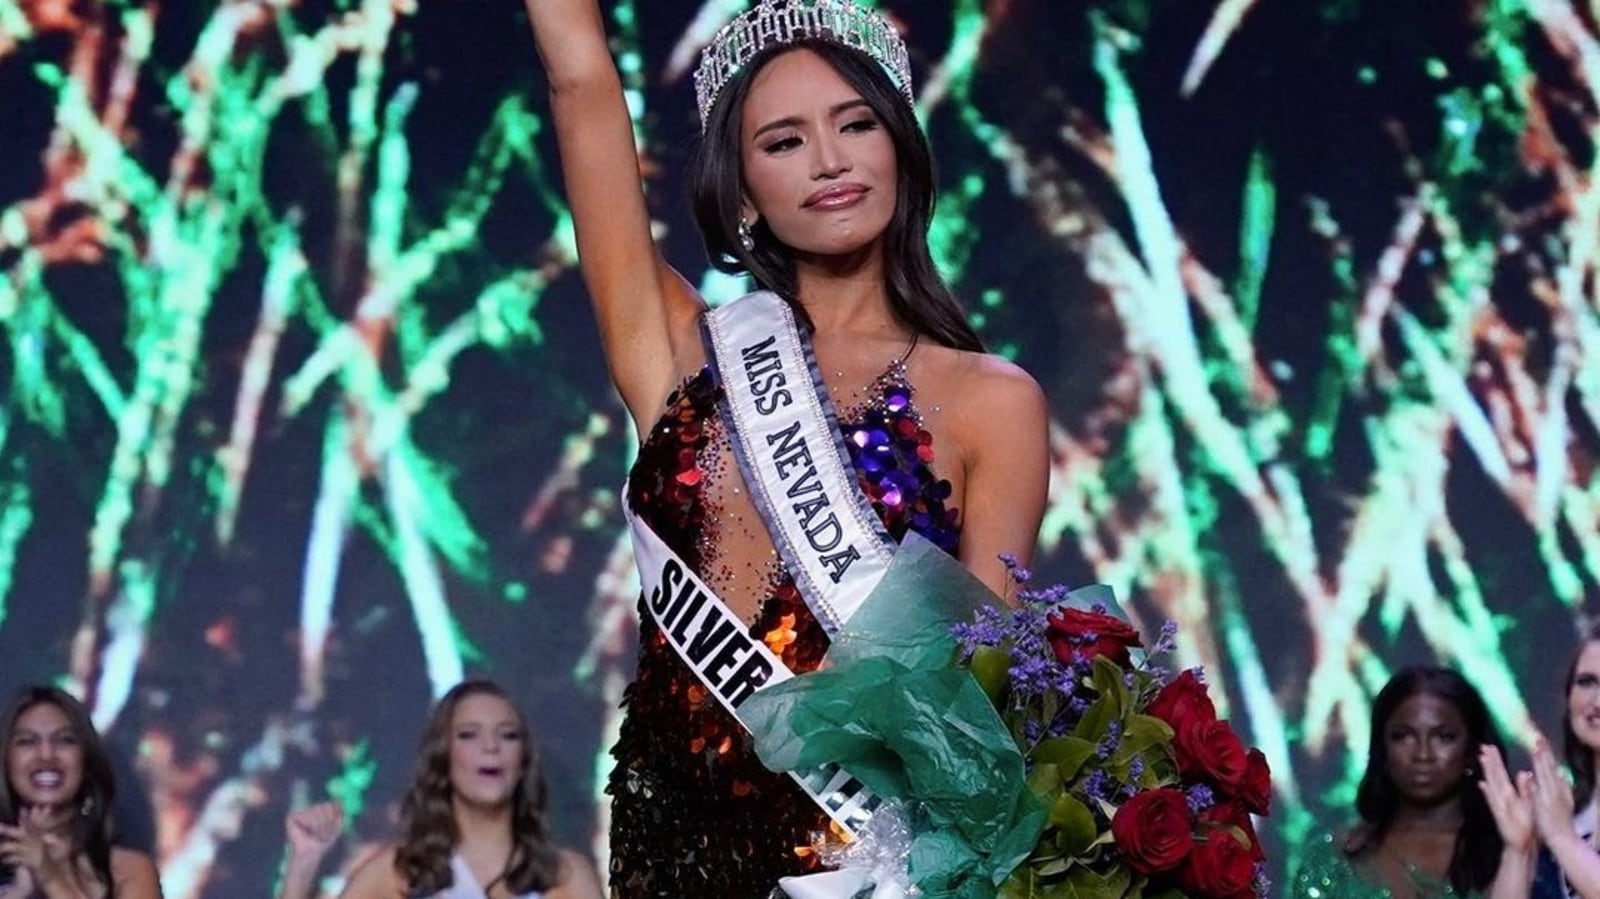 Kataluna Enriquez first transgender woman to compete in Miss